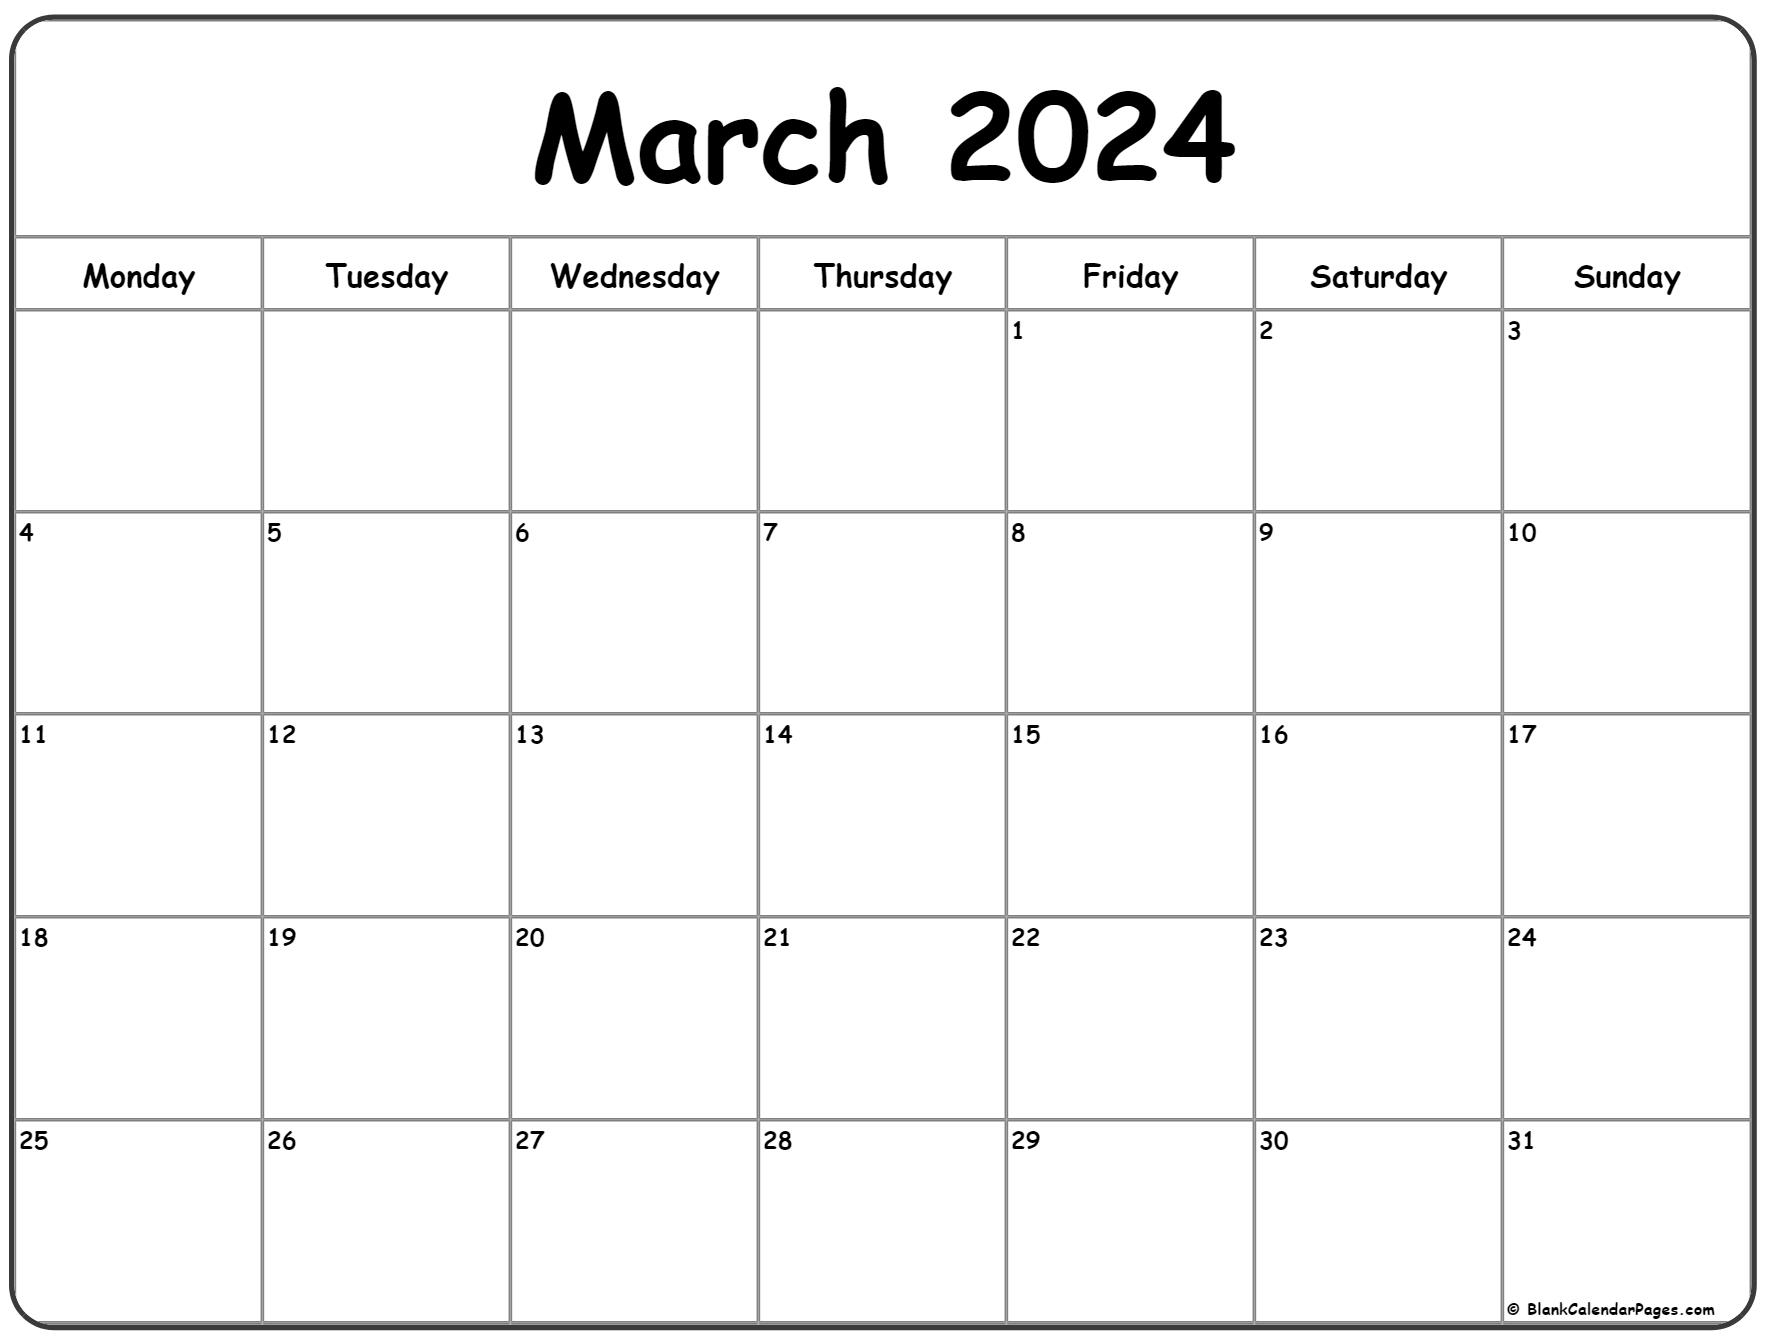 March 2024 Monday Calendar | Monday To Sunday for Blank March 2024 Calendar Printable